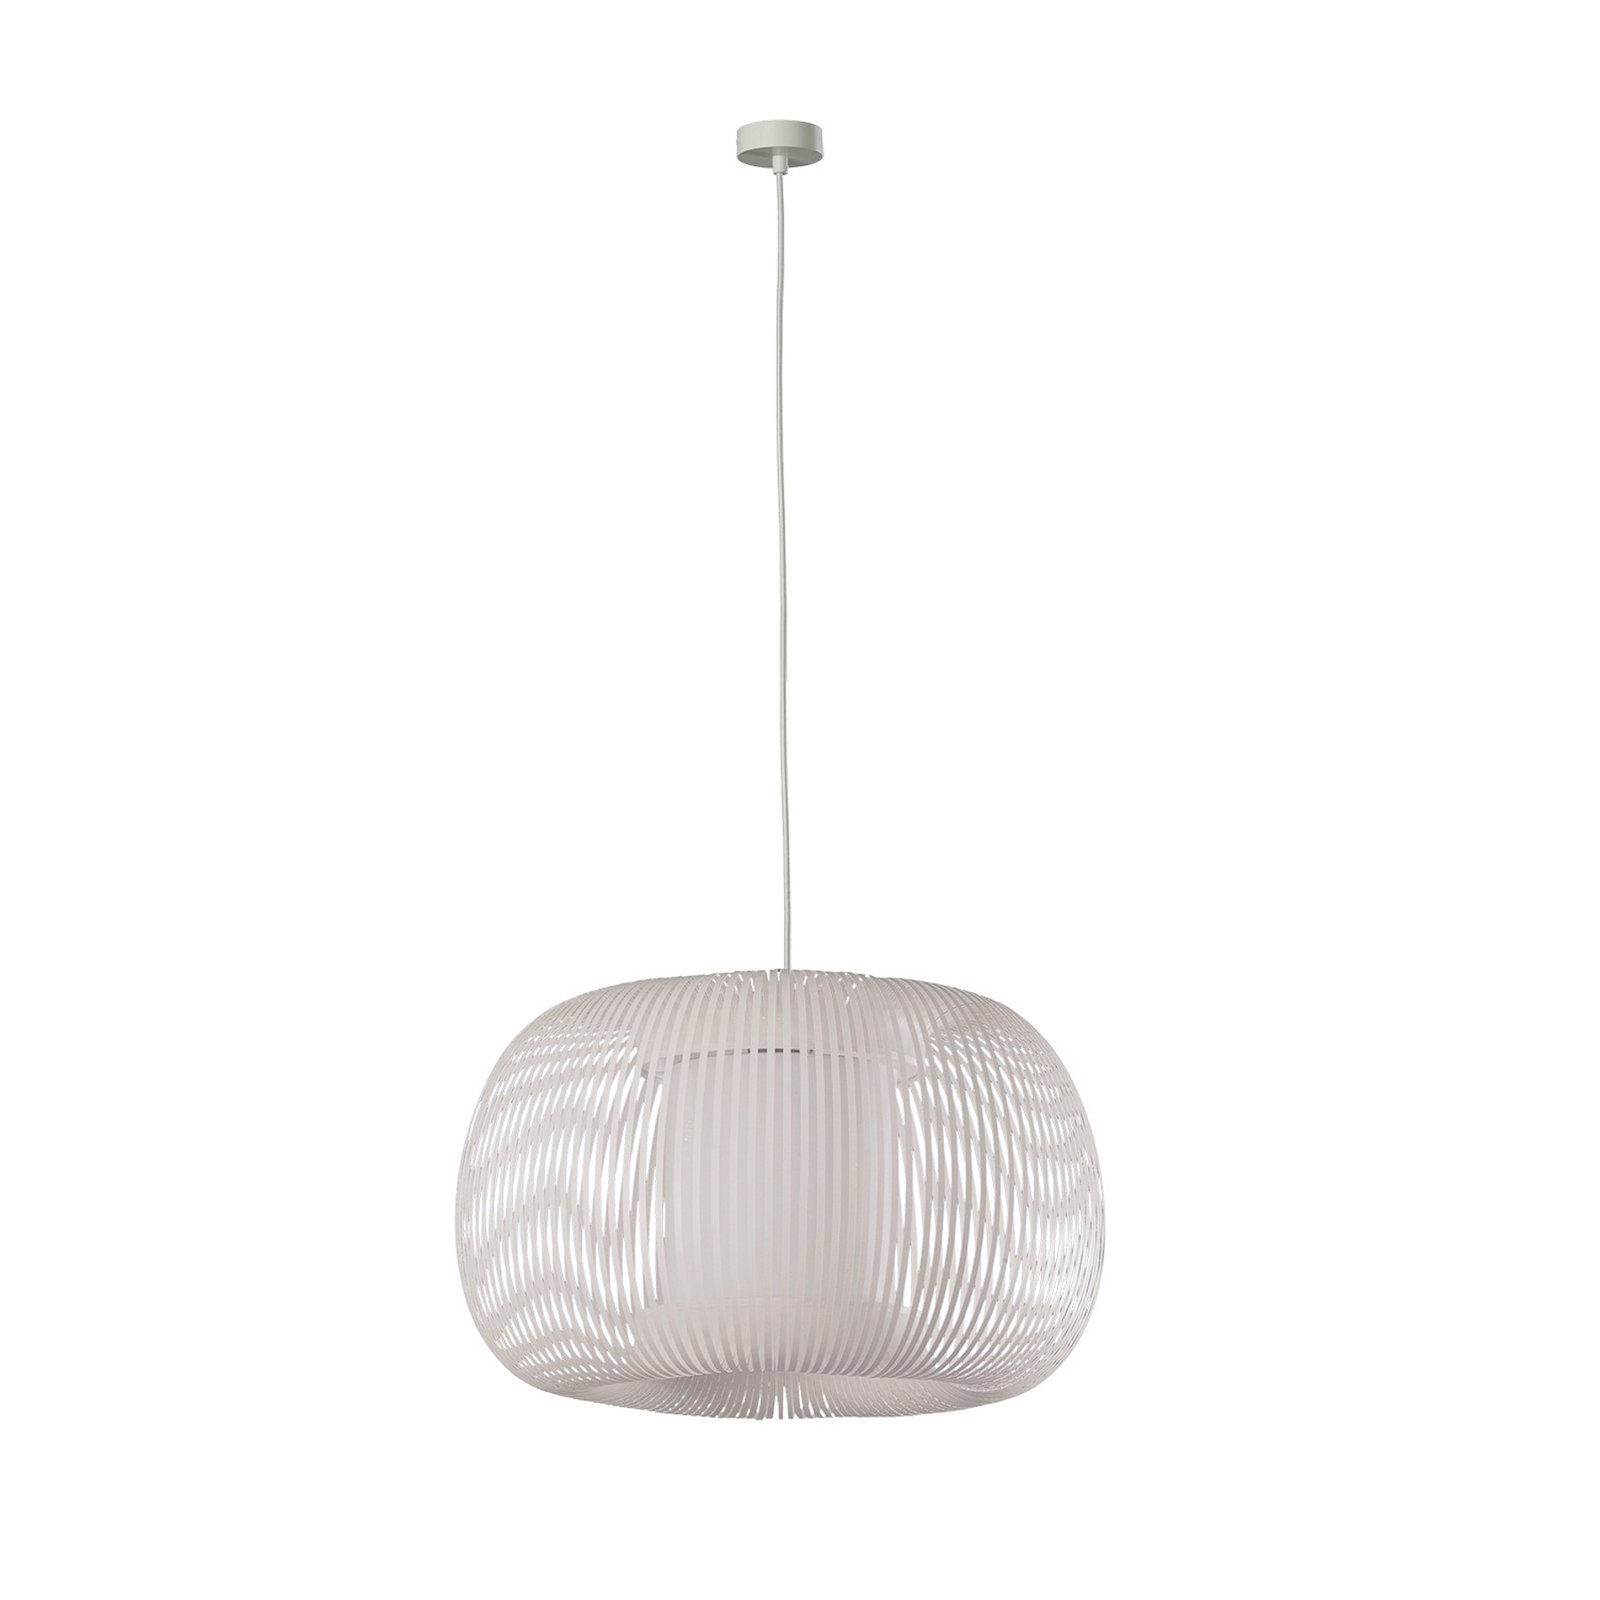 Mirta pendant light, lampshade made of acrylic struts, white, Ø 38 cm